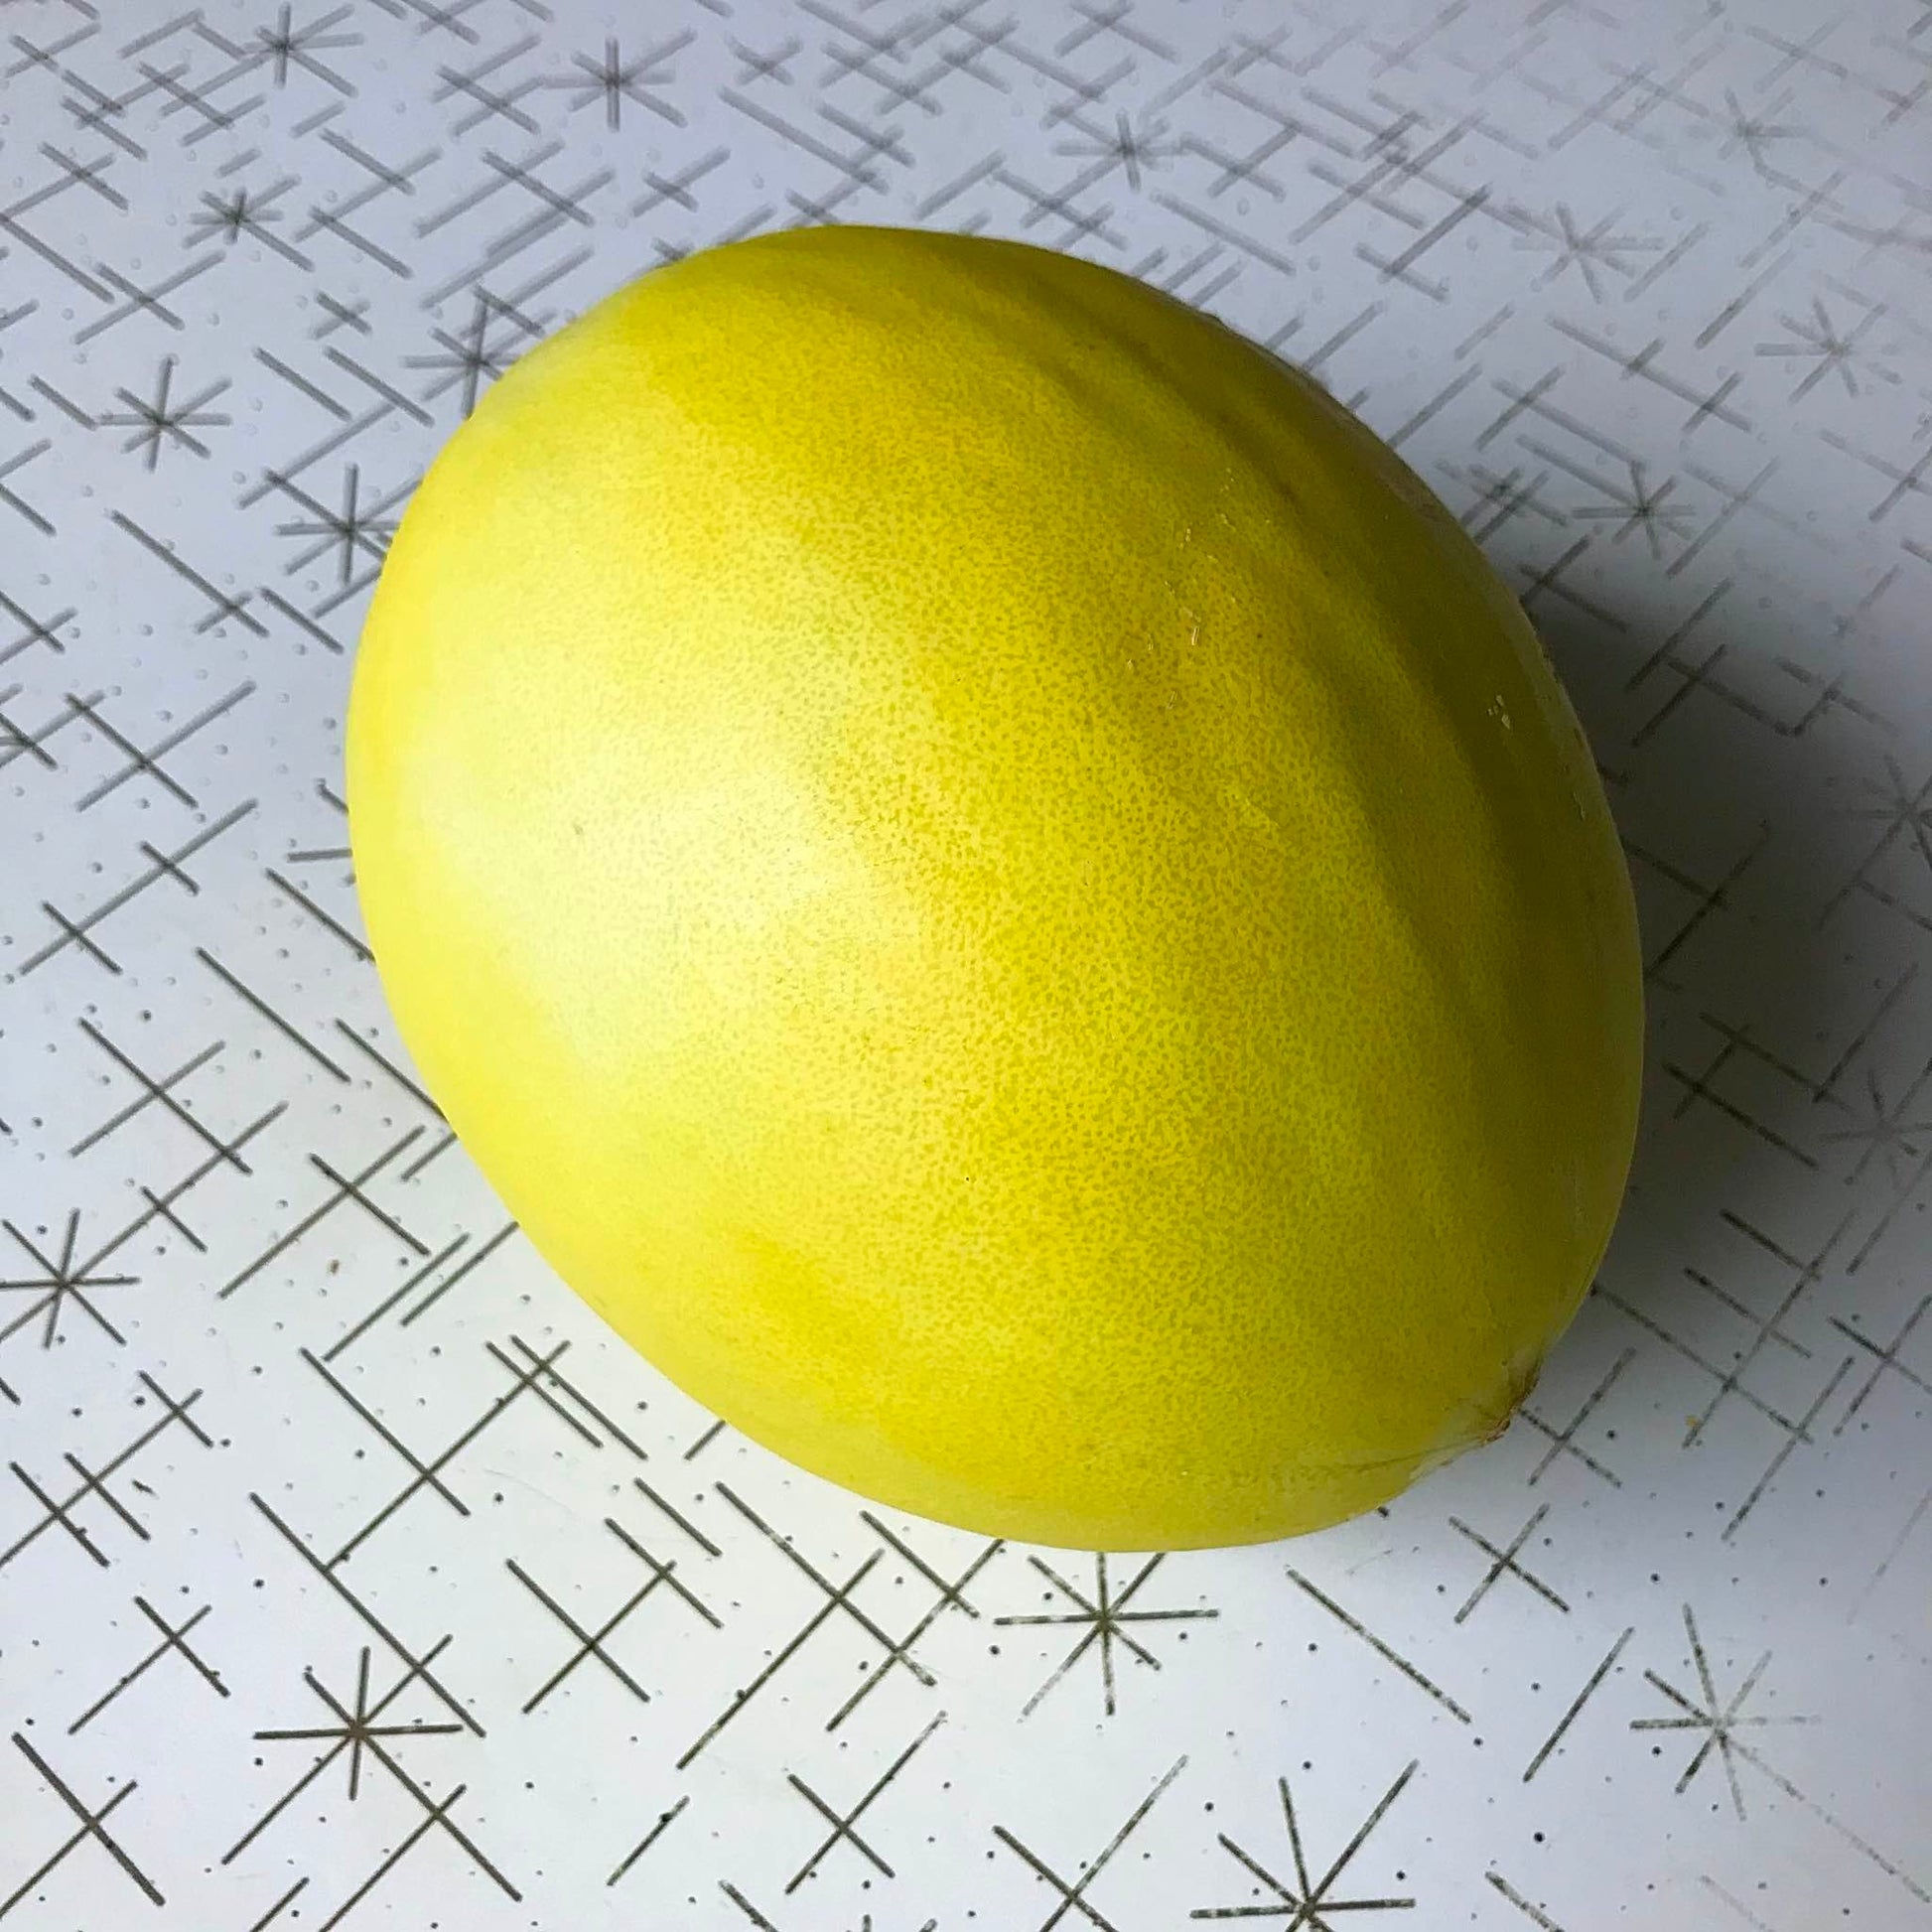 Perfect golden honeydew melon on a table.